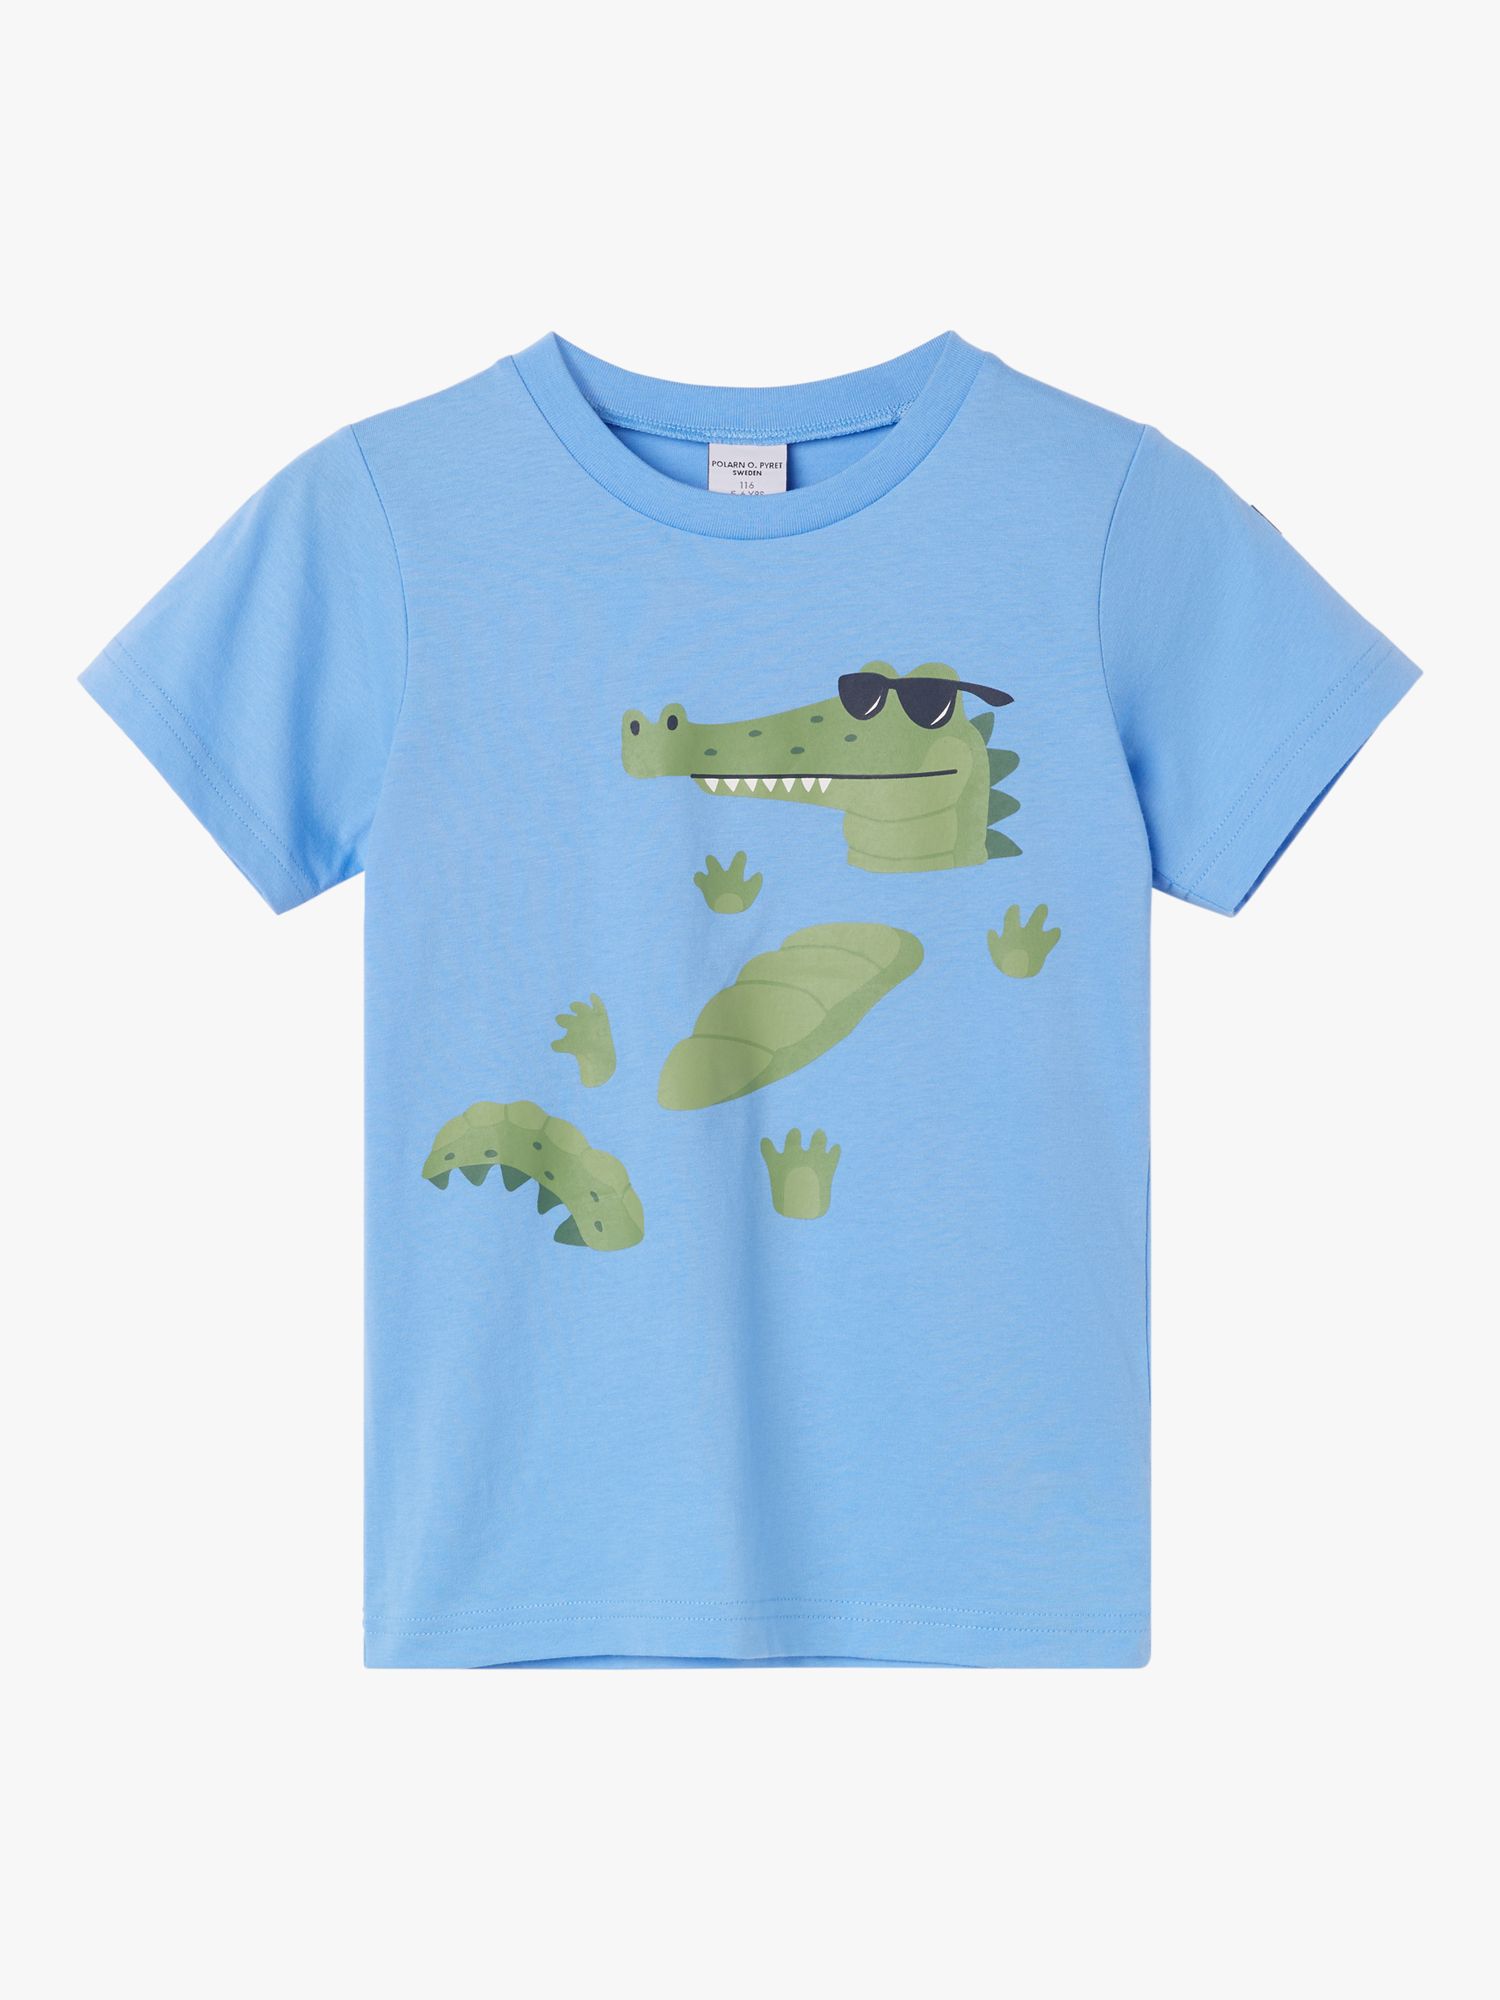 Polarn O. Pyret Kids' Organic Cotton Croc Print T-Shirt, Blue, 12-18 months